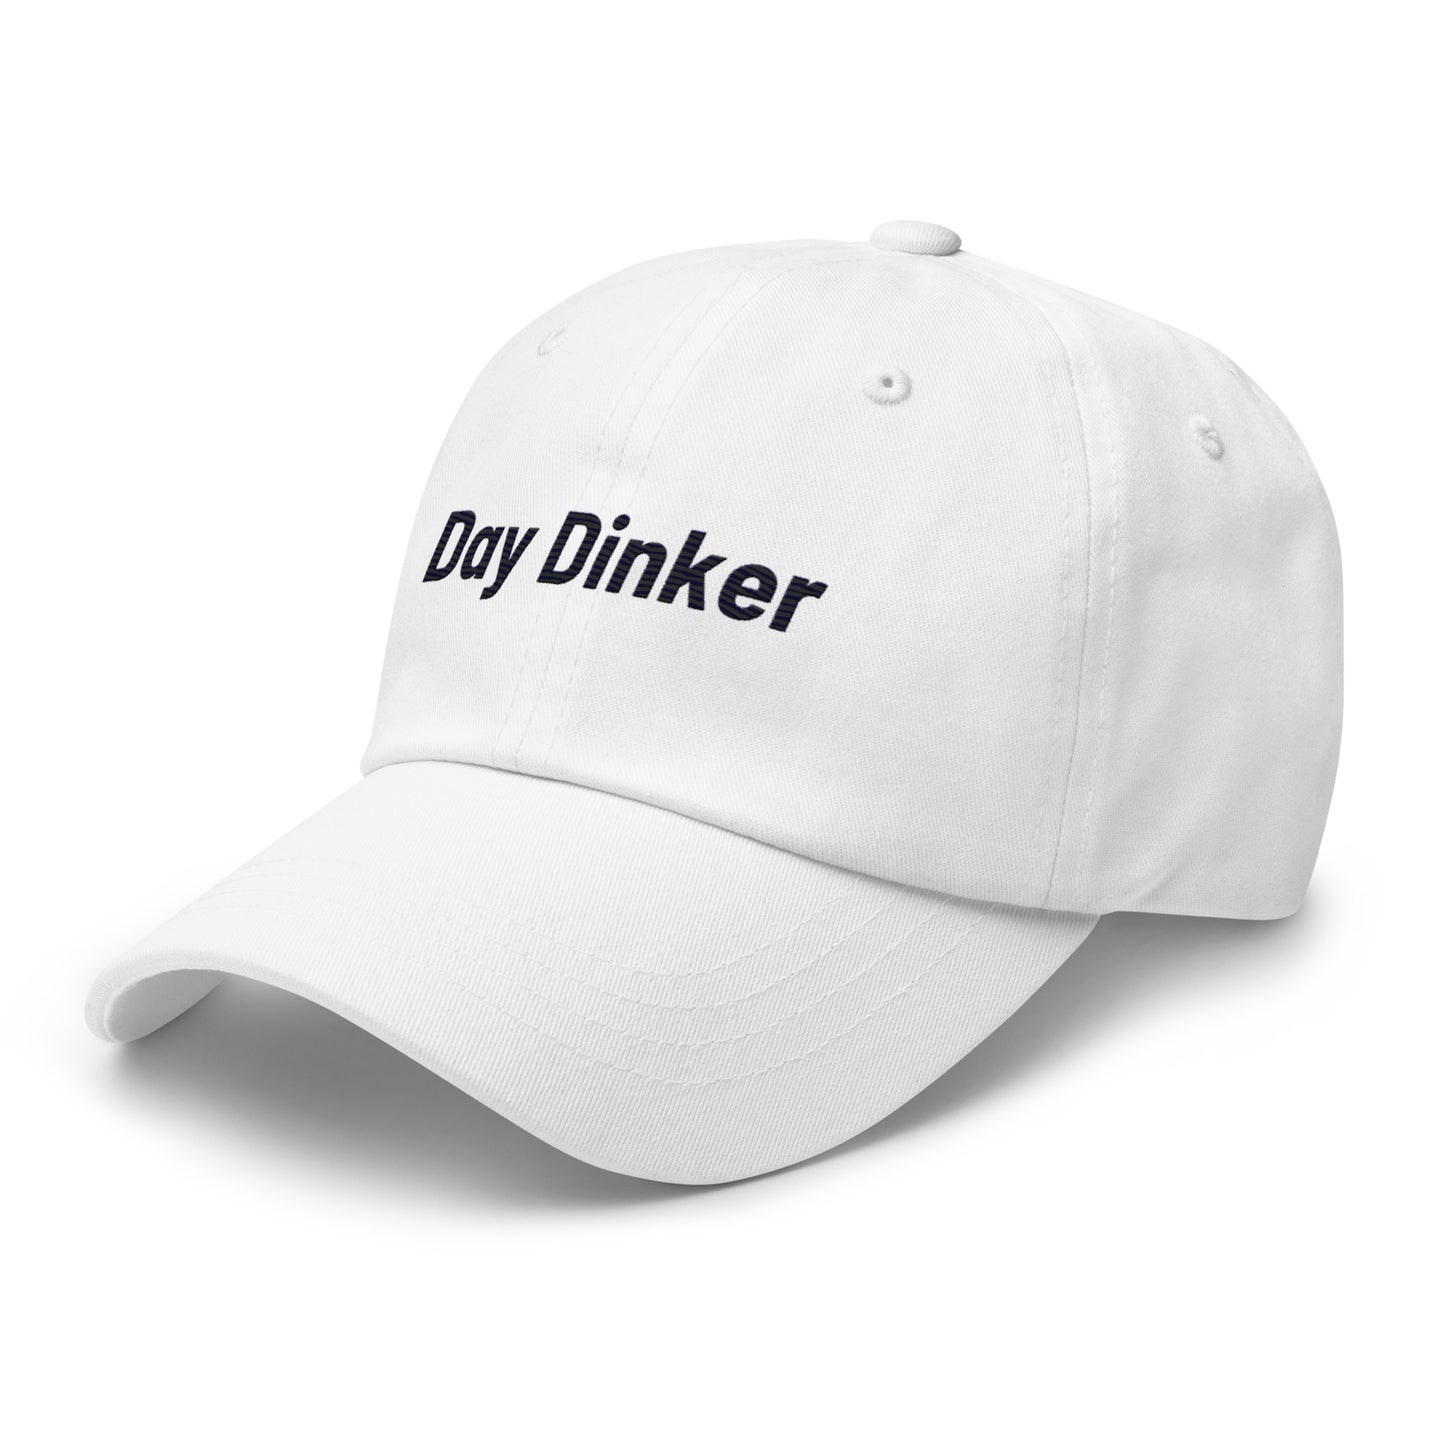 "DAY DINKER" PICKLEBALL DAD HAT DARK BLUE